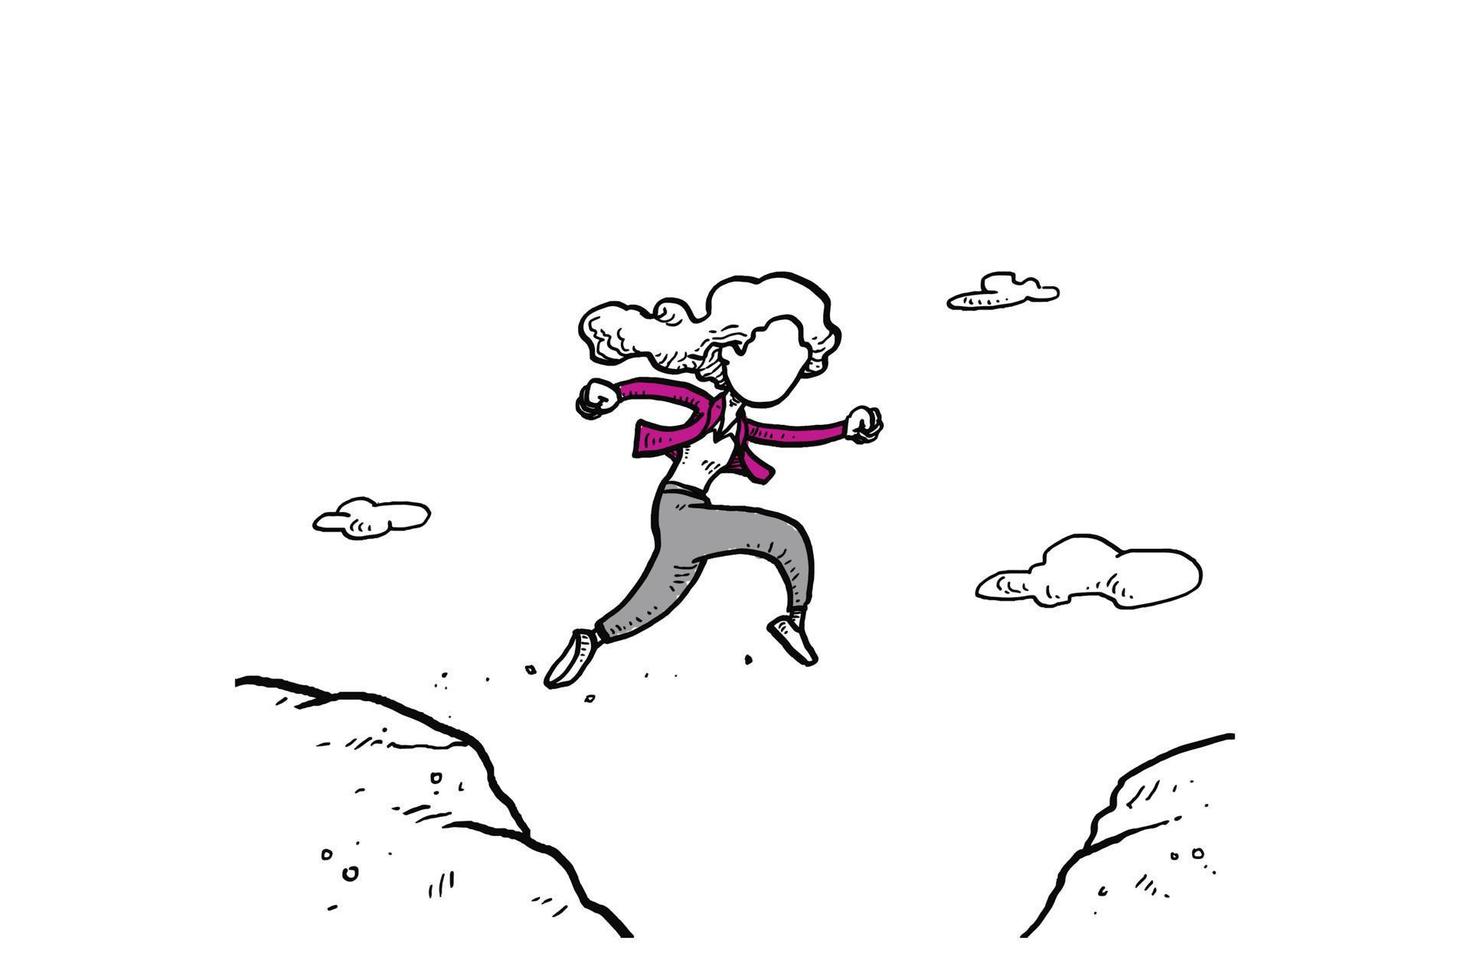 Woman jump through the gap between hill., jump over cliff. Hand drawn vector illustration design